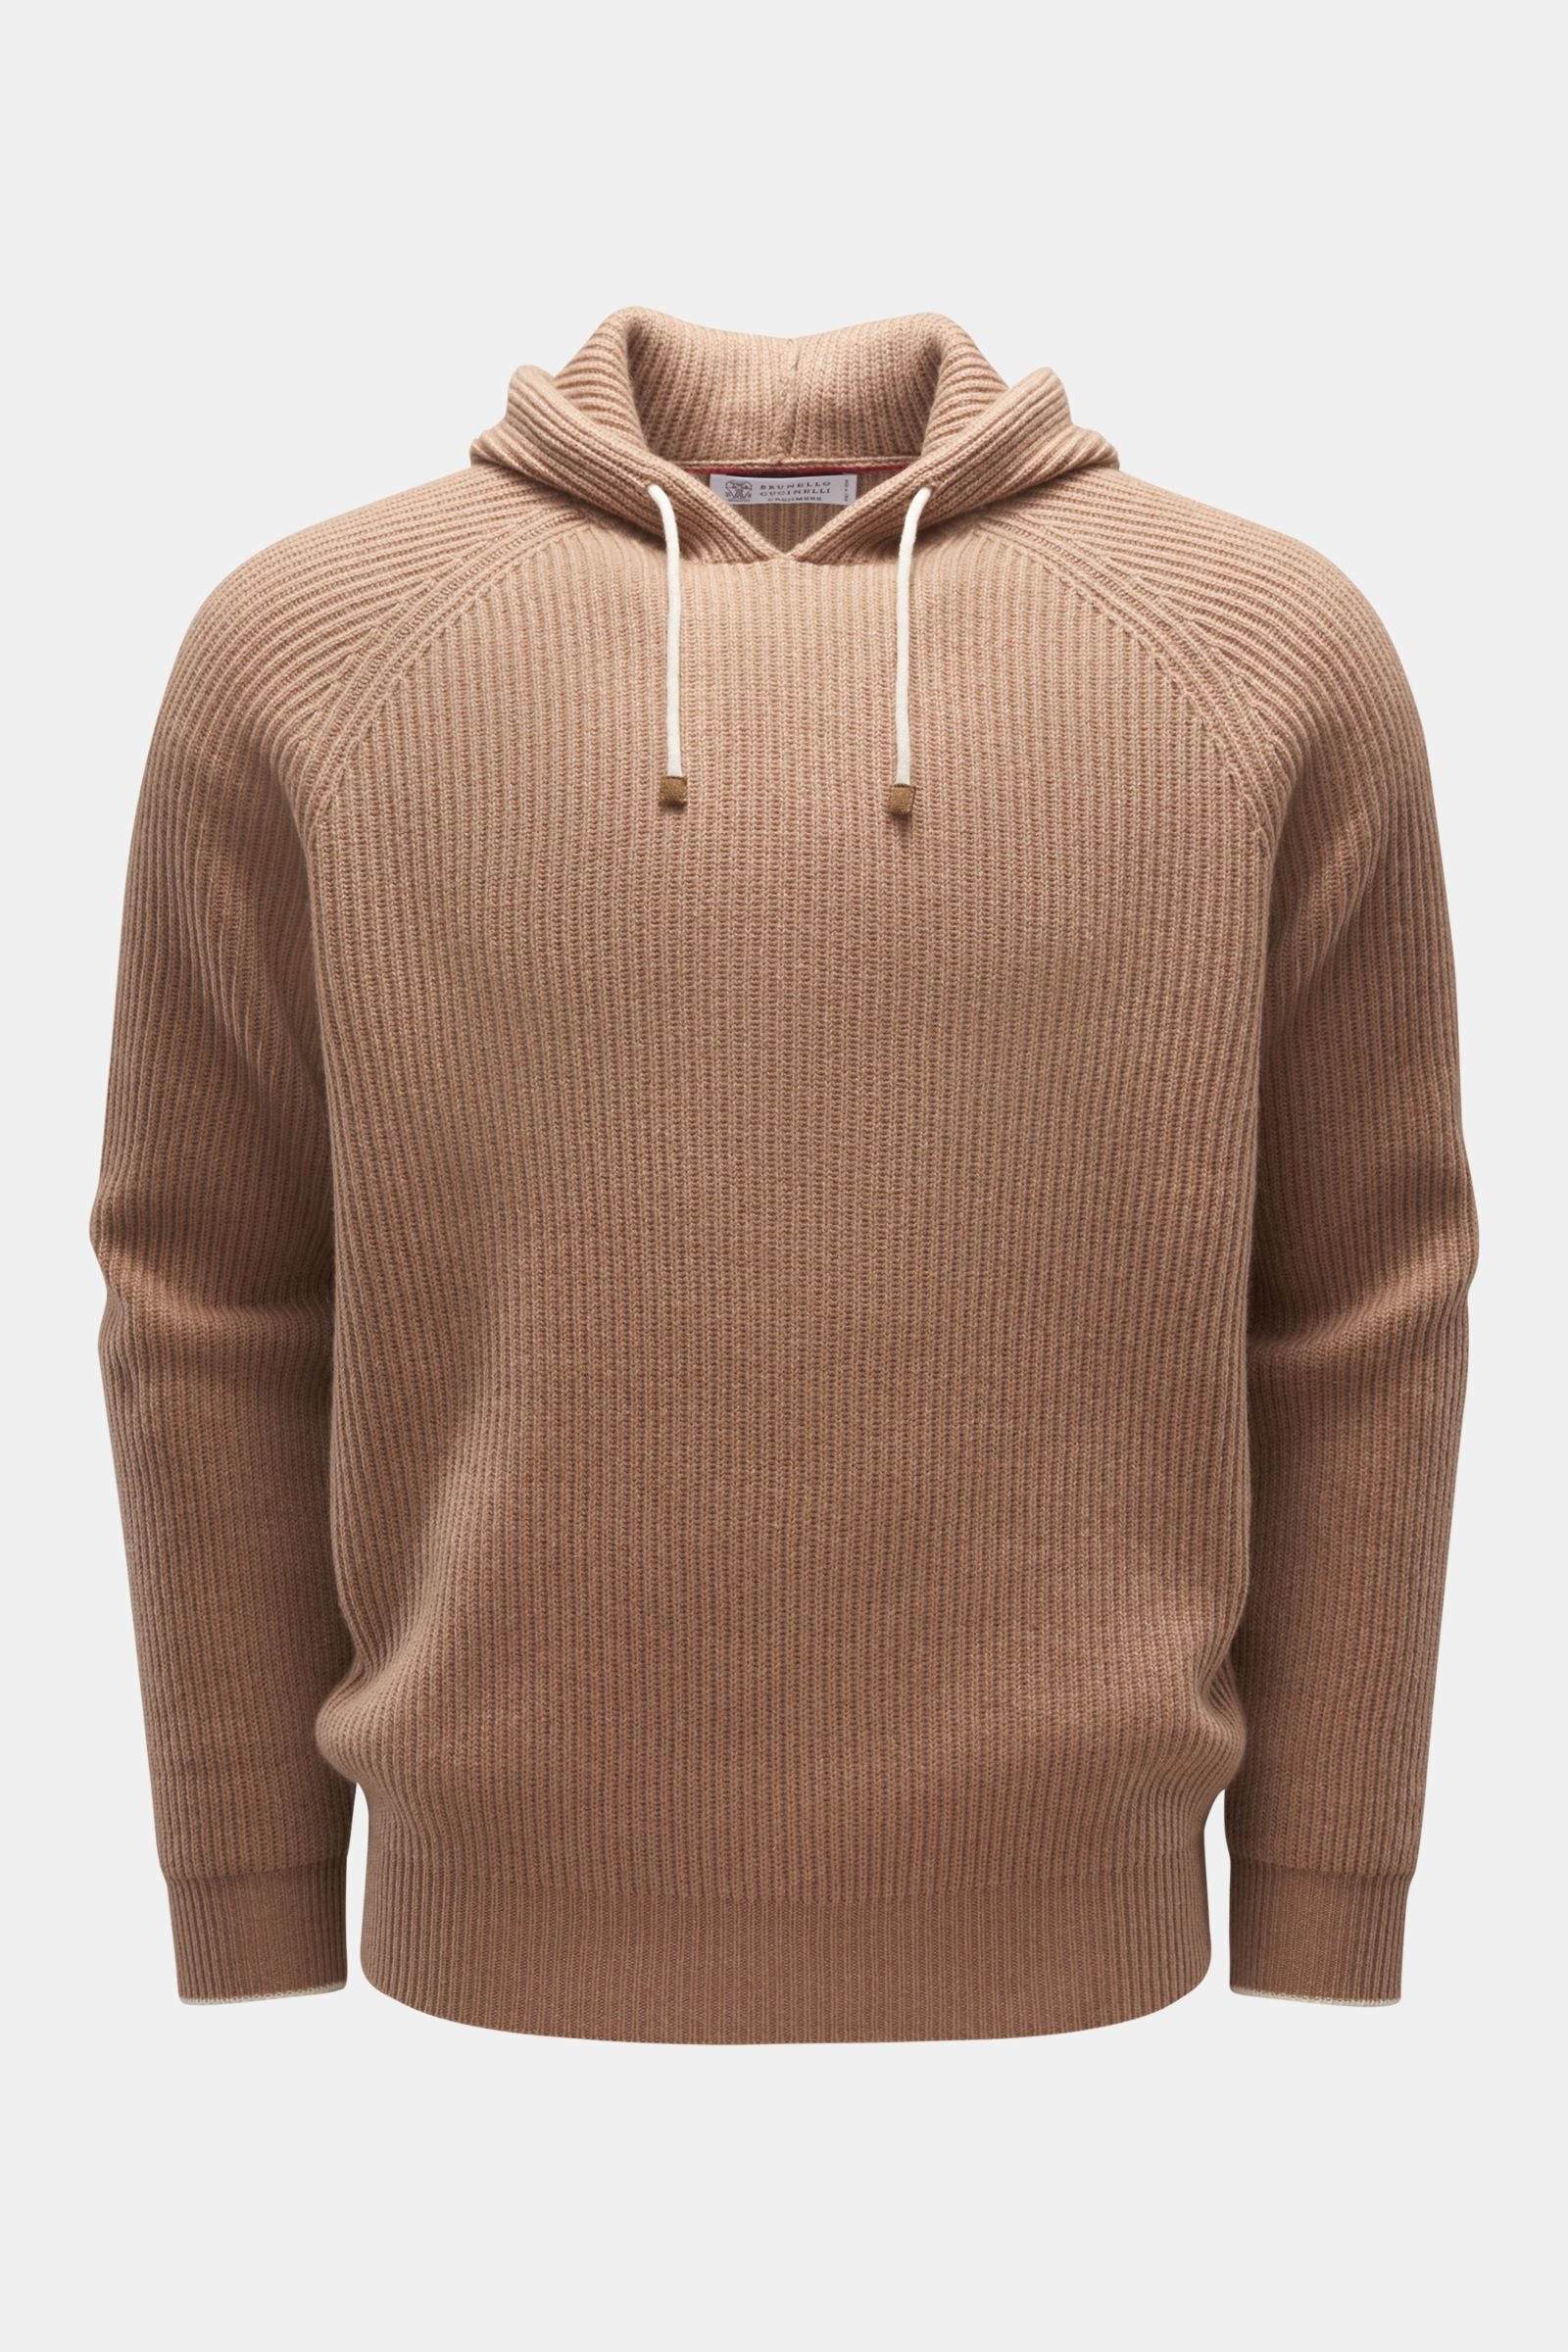 Cashmere hooded jumper grey-brown